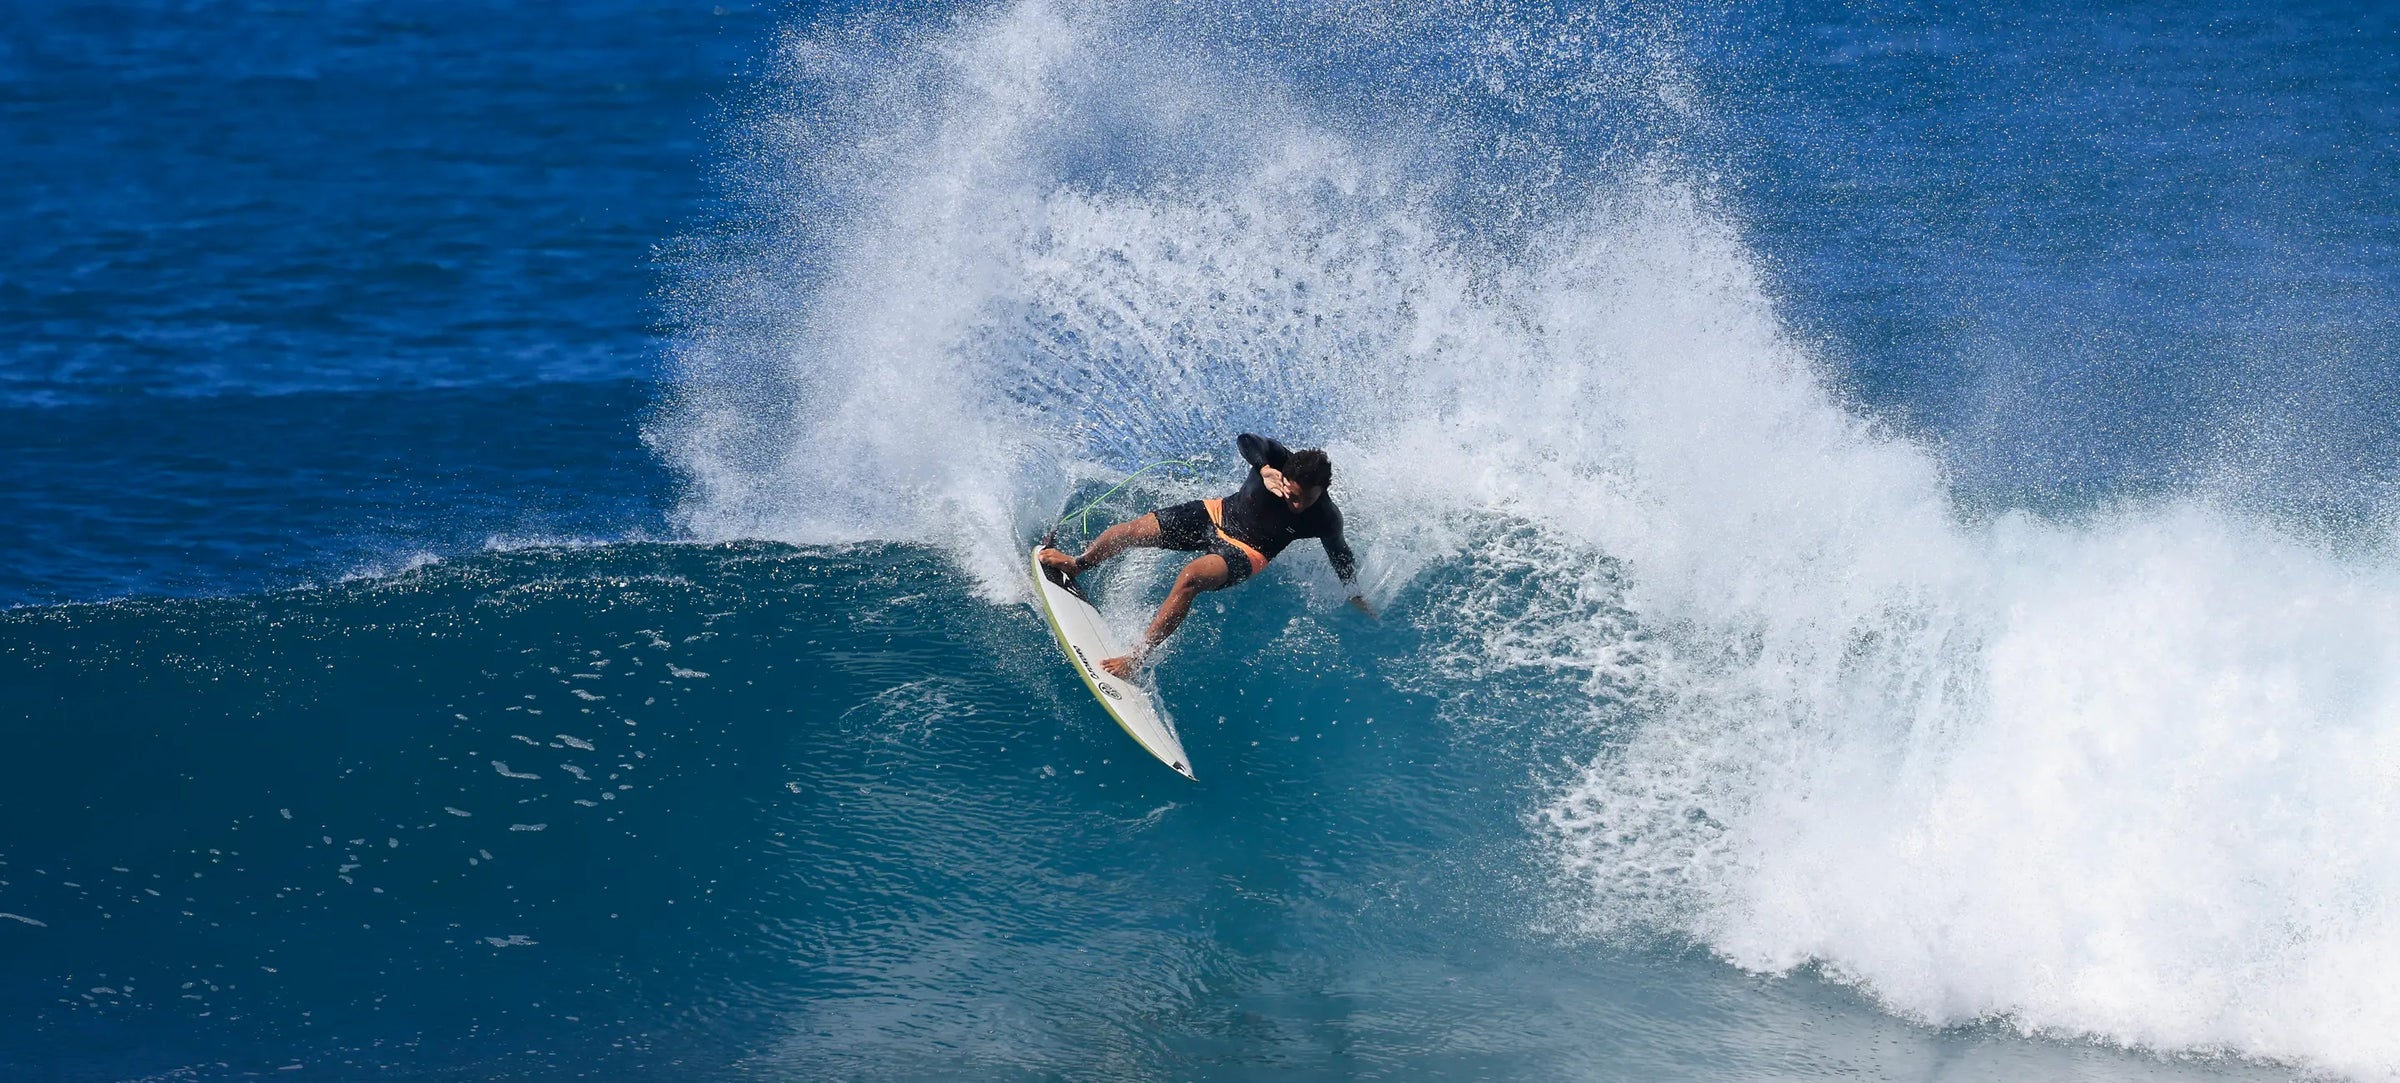 Pro surfer Josh Moniz carves a turn on a wave at Rocky Point, Hawaii